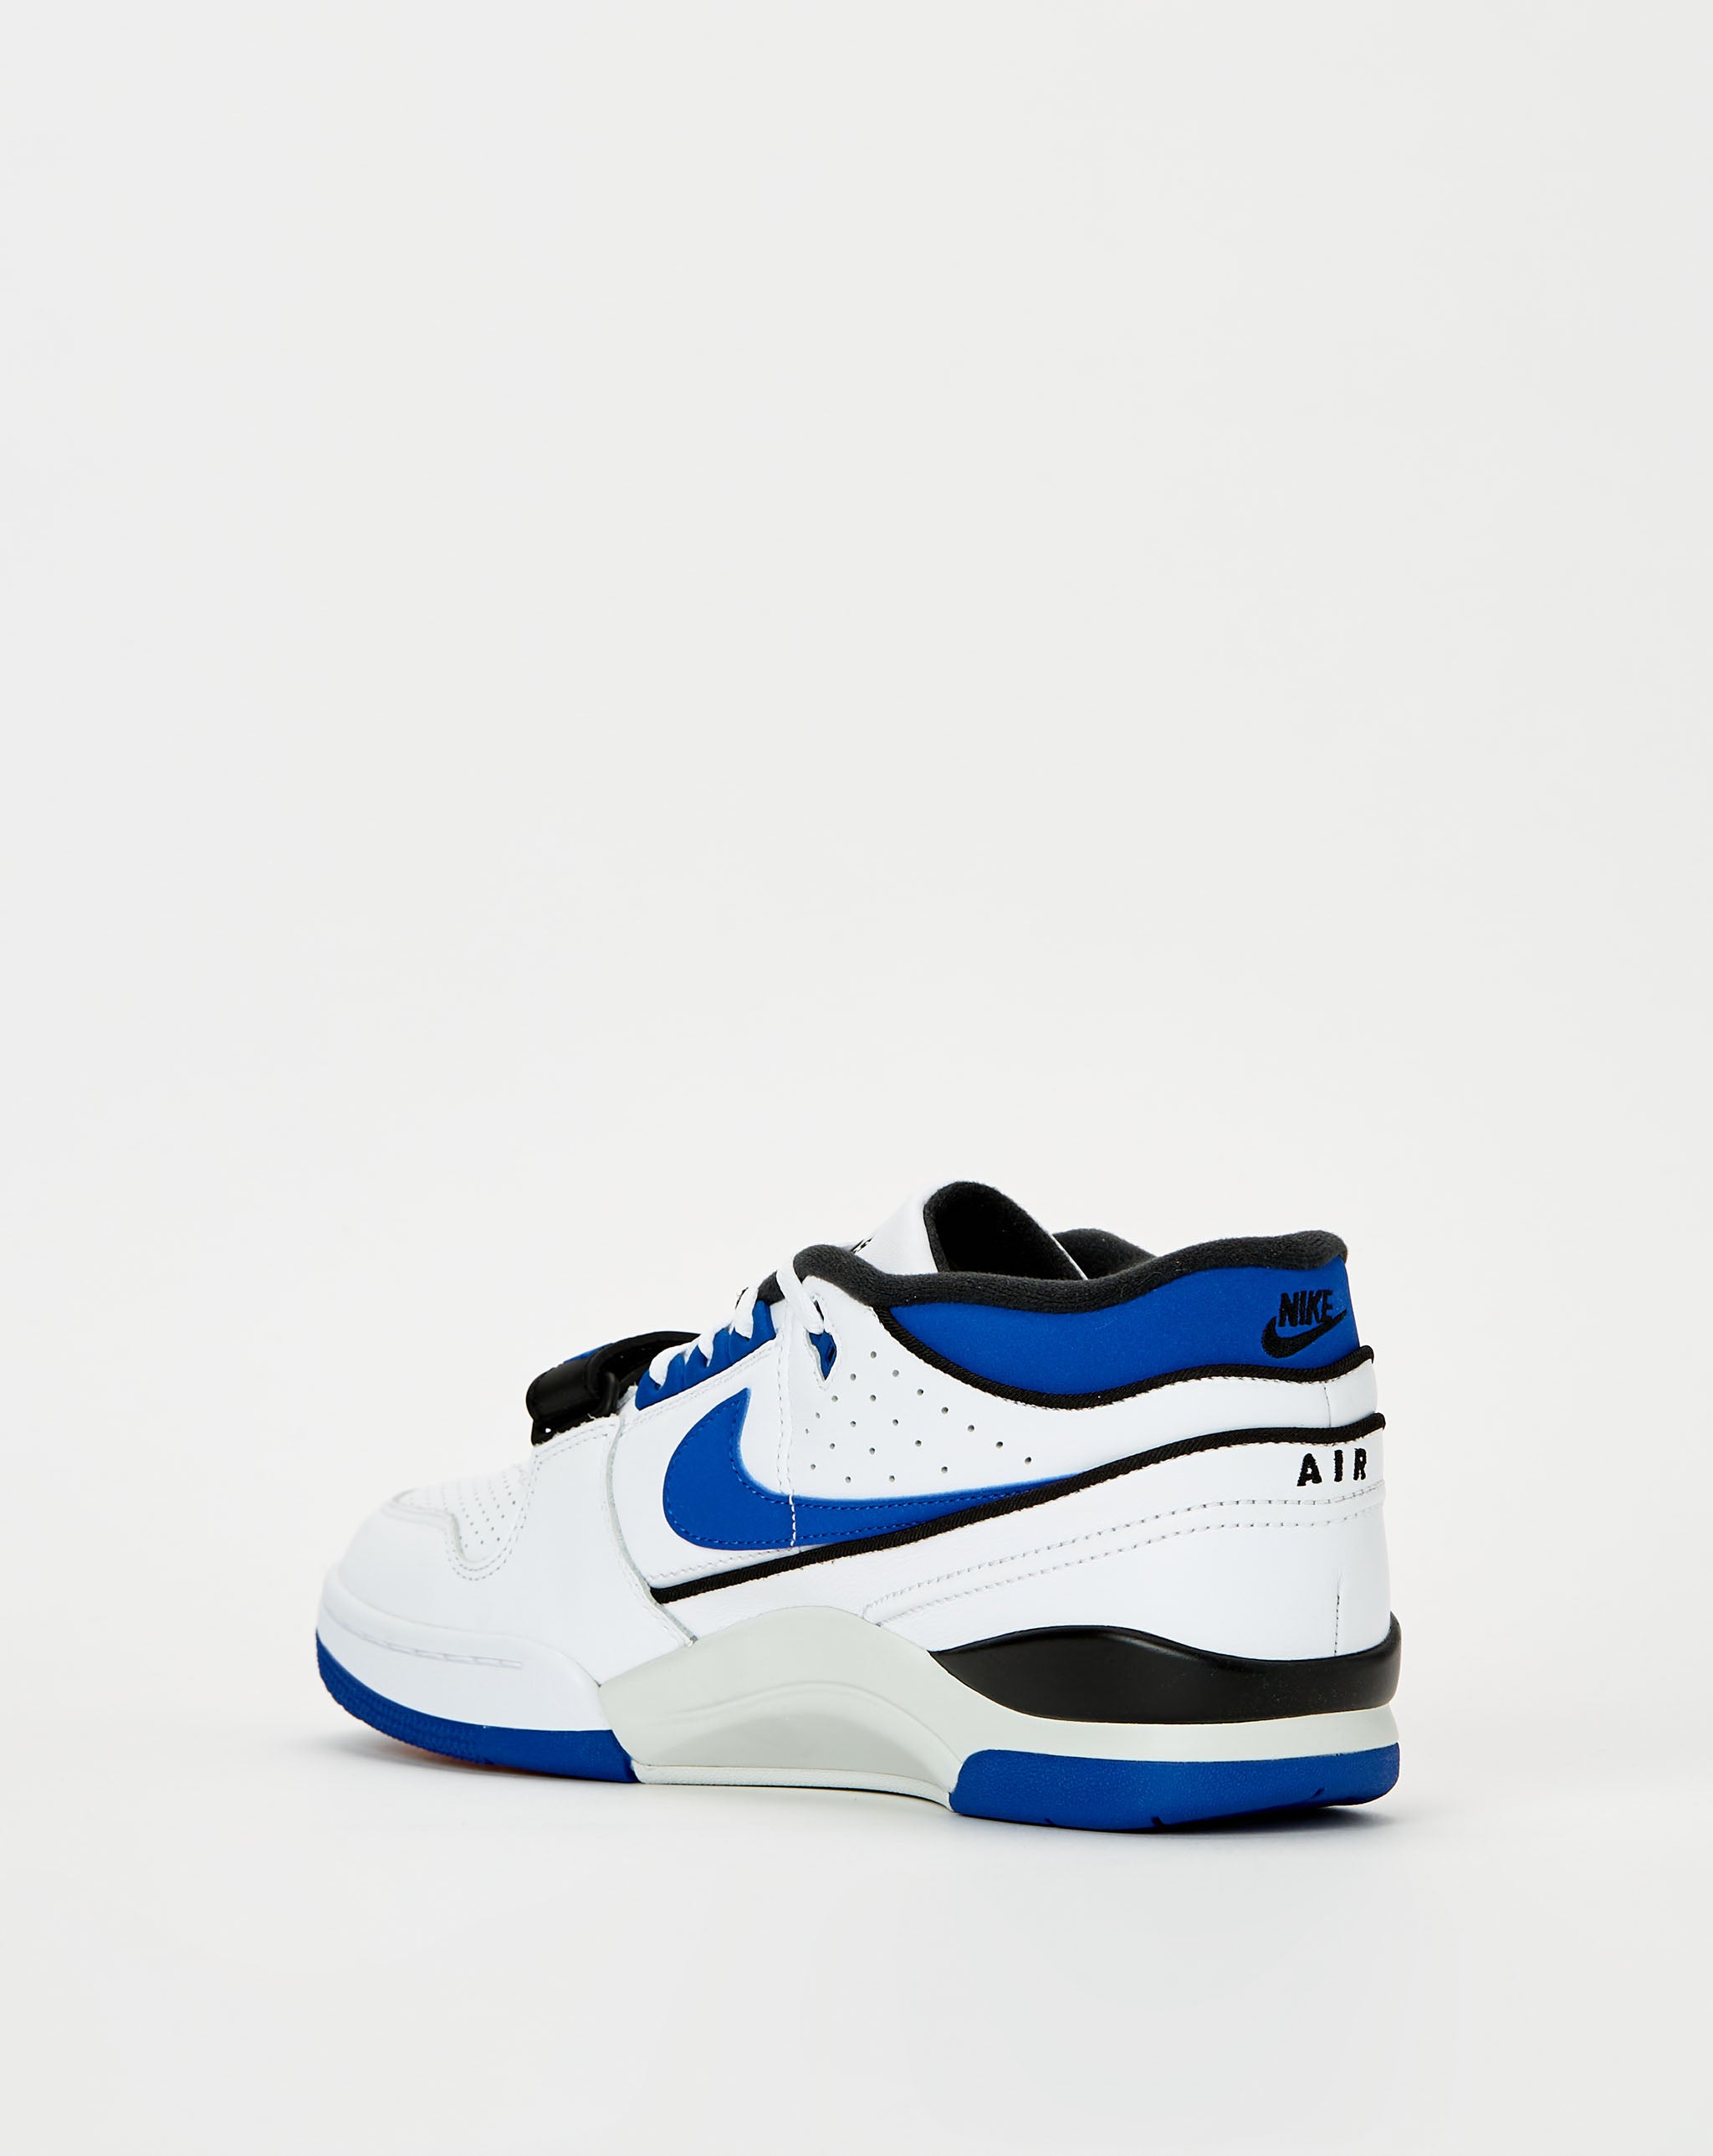 Nike Womens Nike Zoom Strike Running Shoes Sz 7 Used Vgc Athletic  - Cheap Urlfreeze Jordan outlet